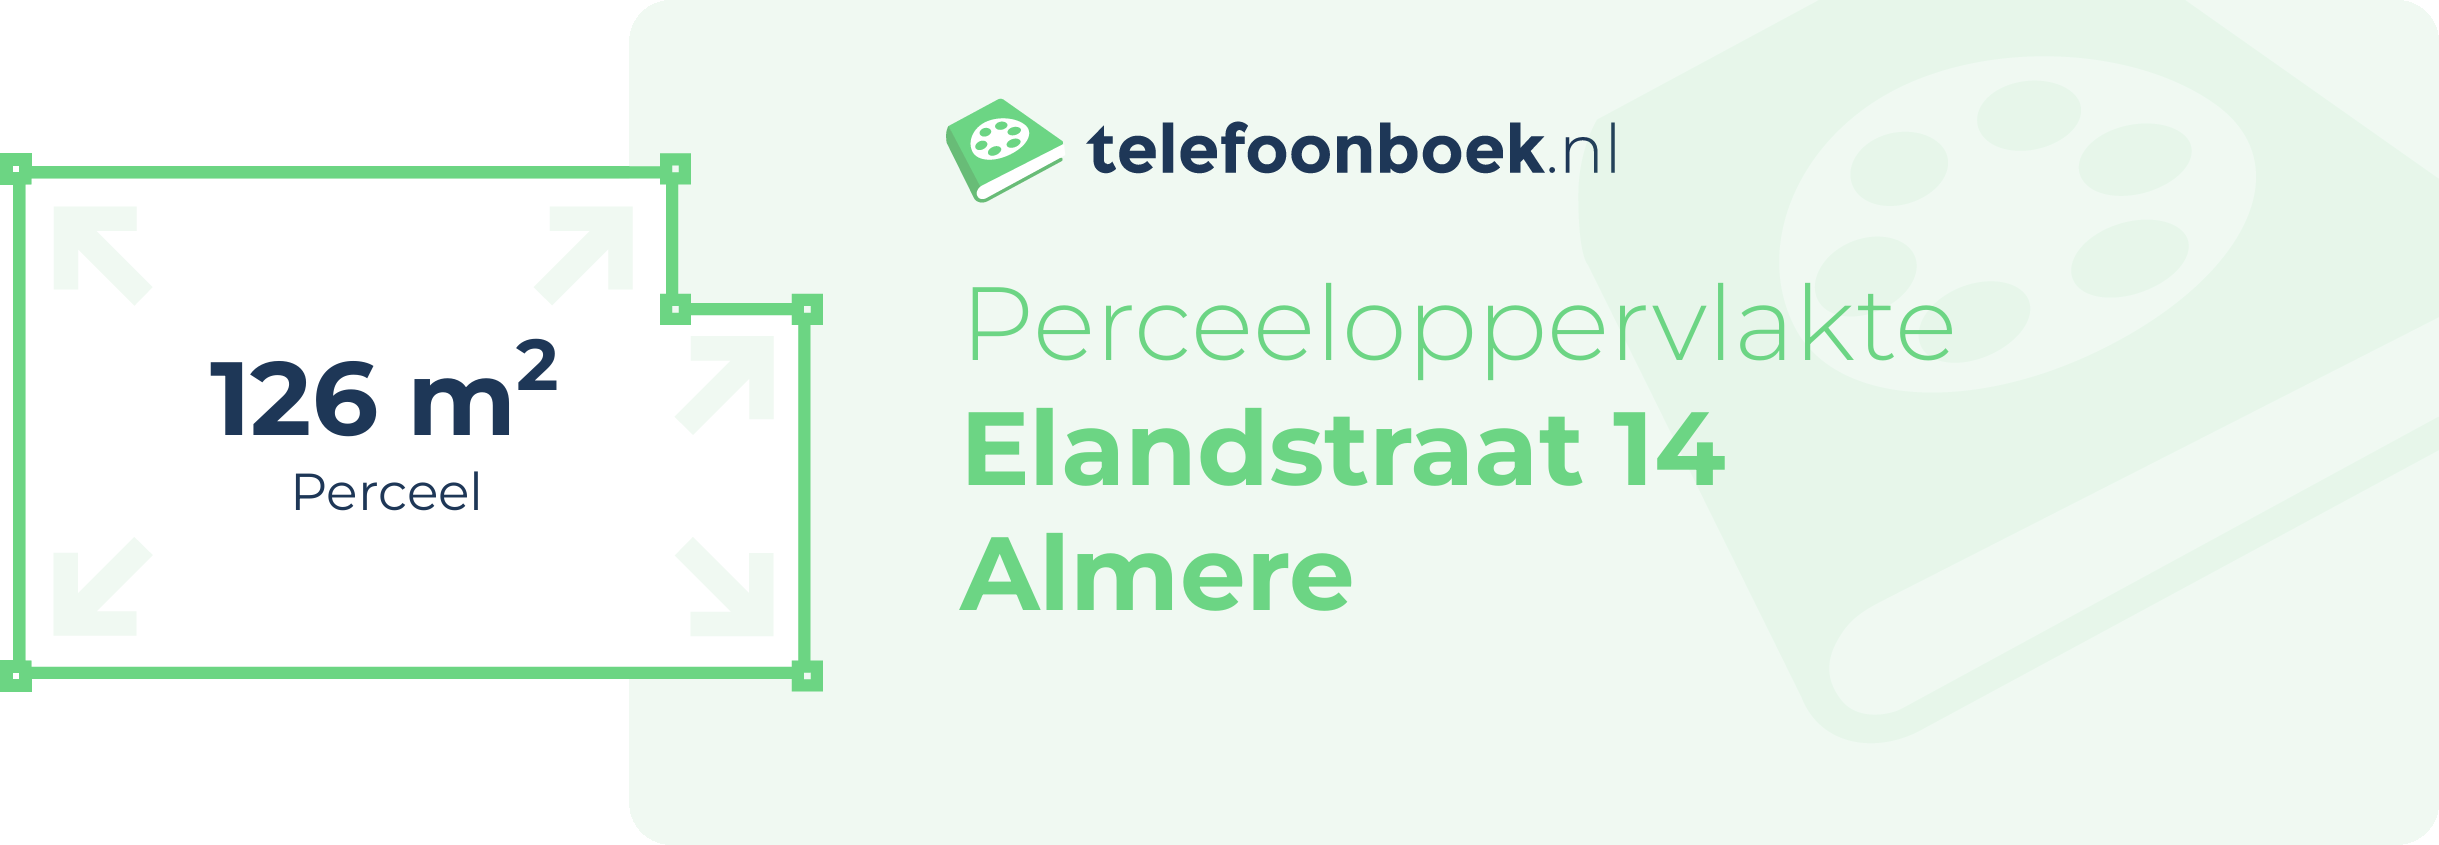 Perceeloppervlakte Elandstraat 14 Almere